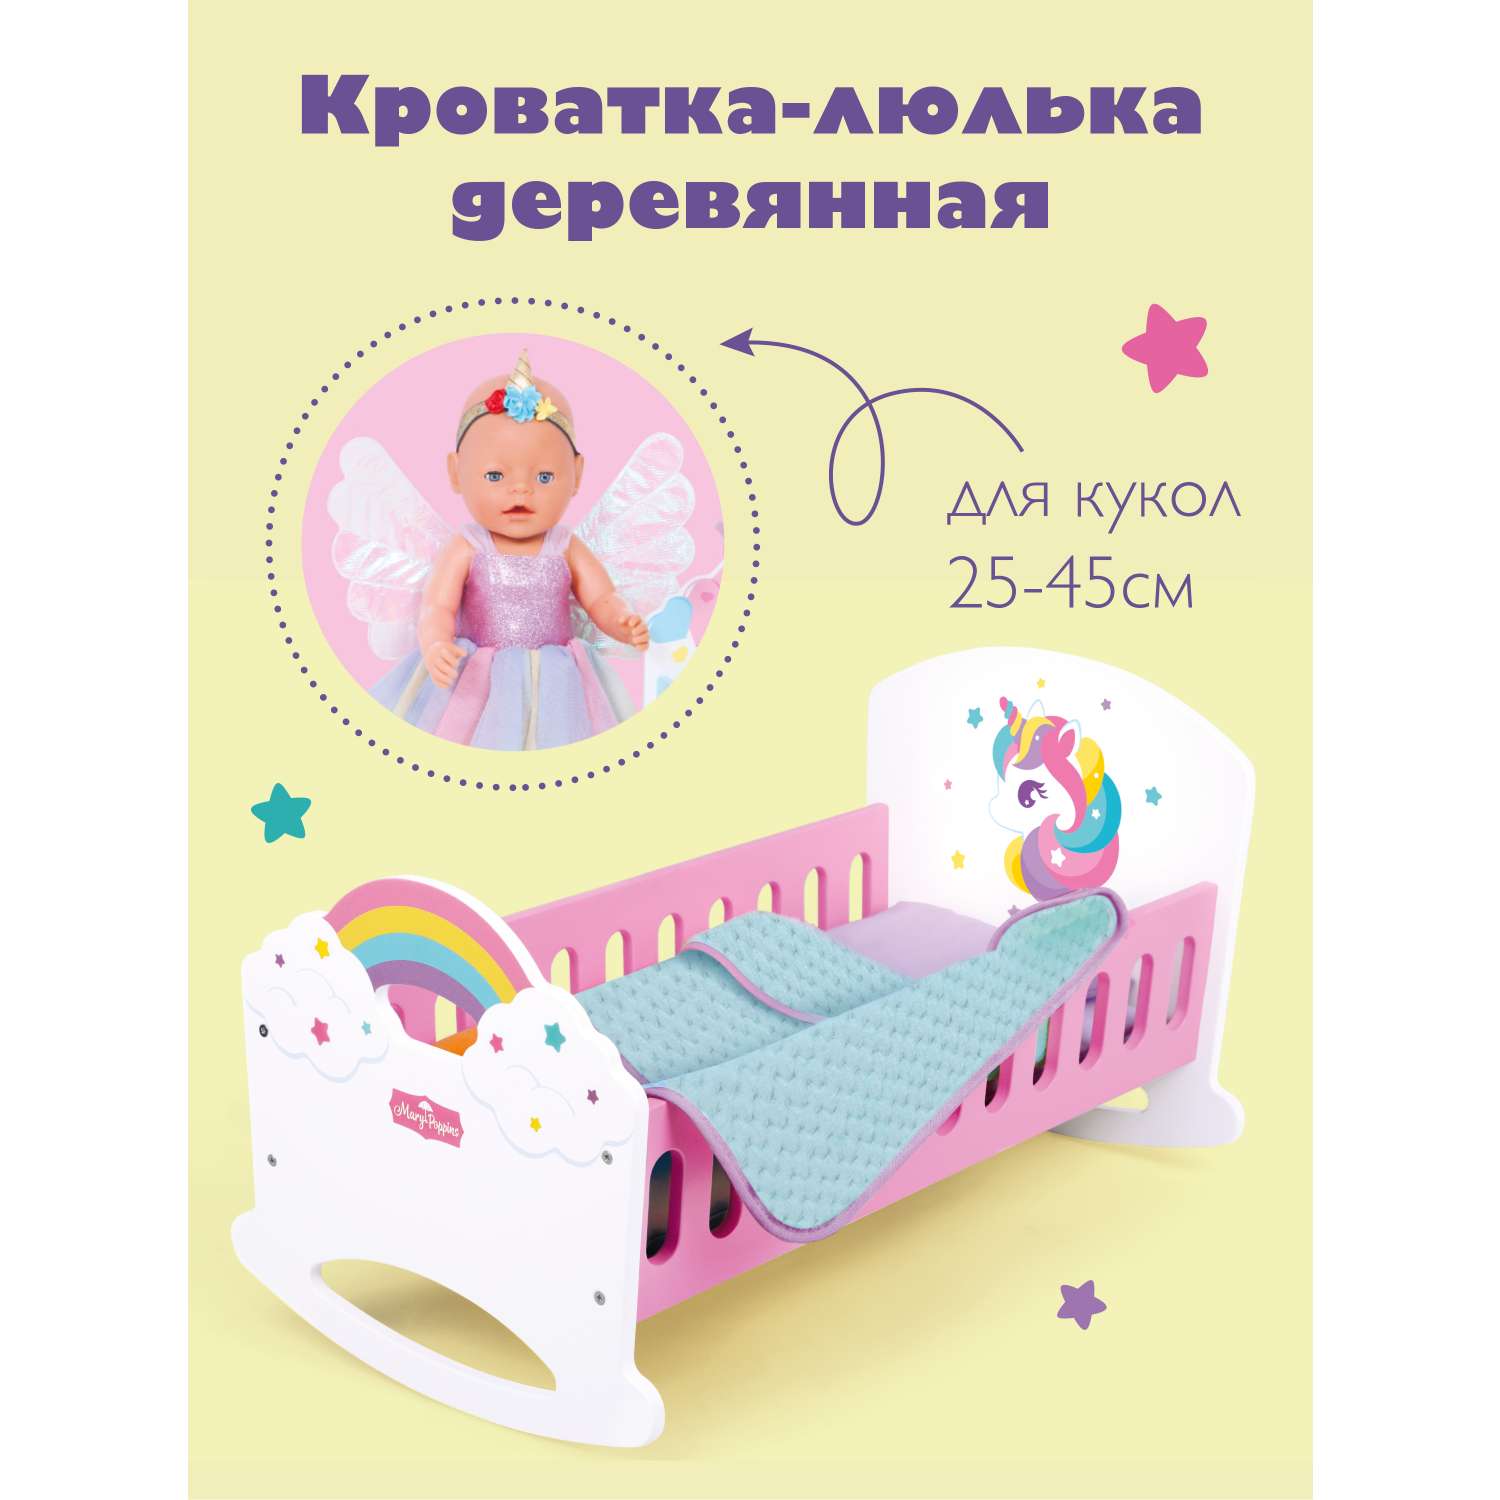 Кроватка-люлька Mary Poppins мебель для куклы пупса кукольная кукол. Единорог 67503 - фото 2